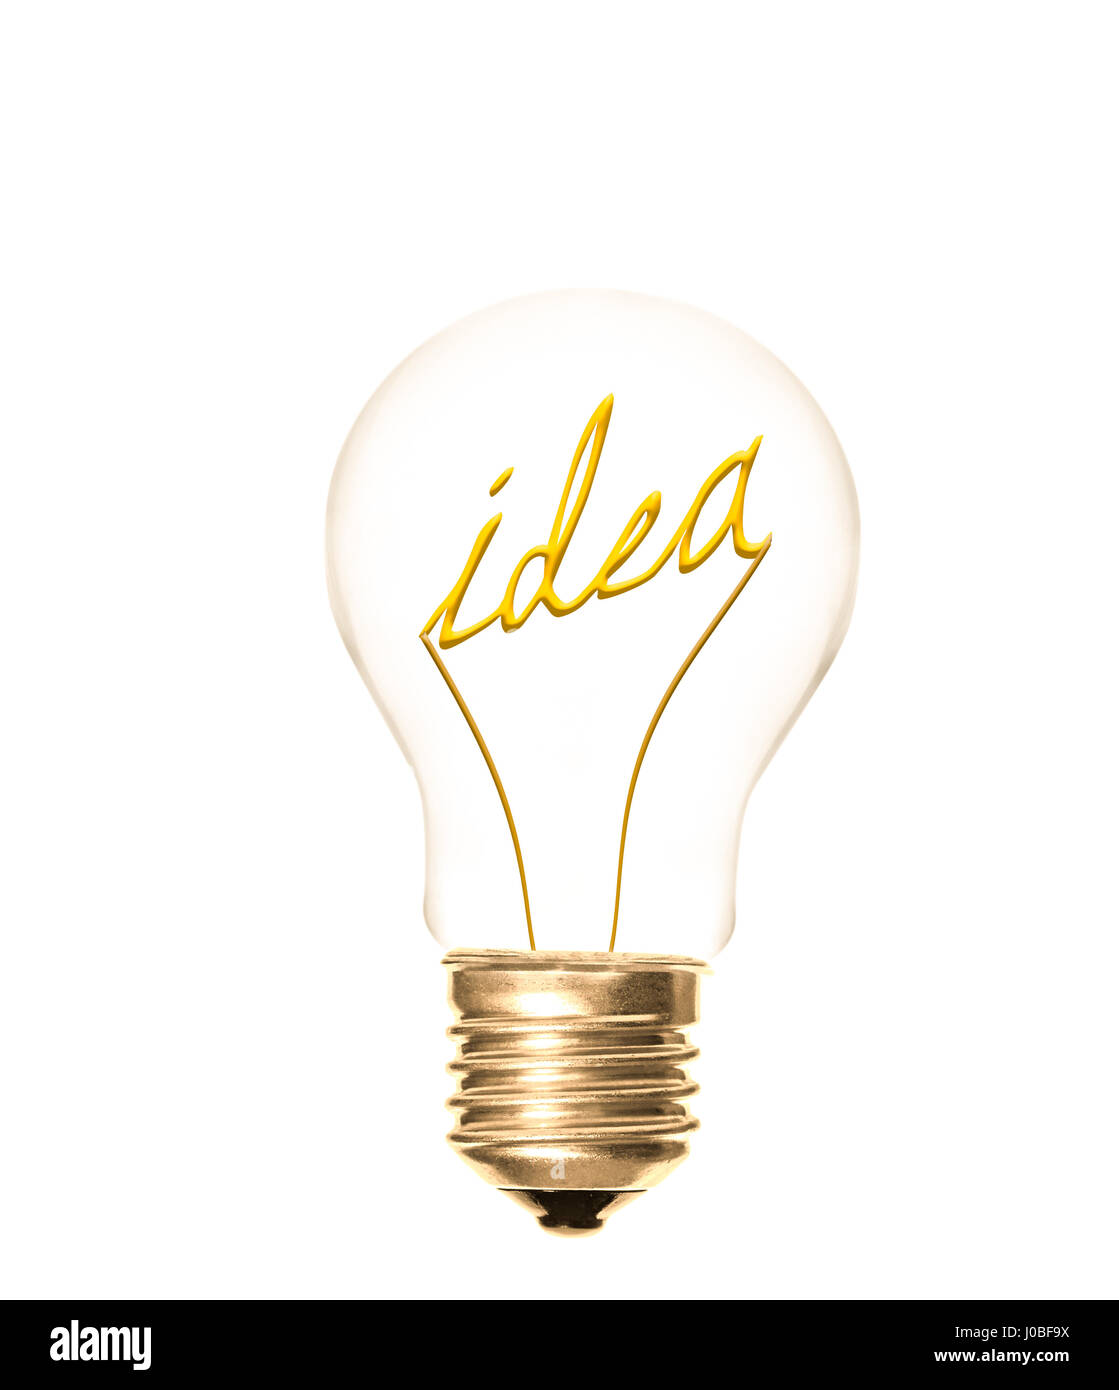 the idea of word idea providing light as a lightbulb Stock Photo